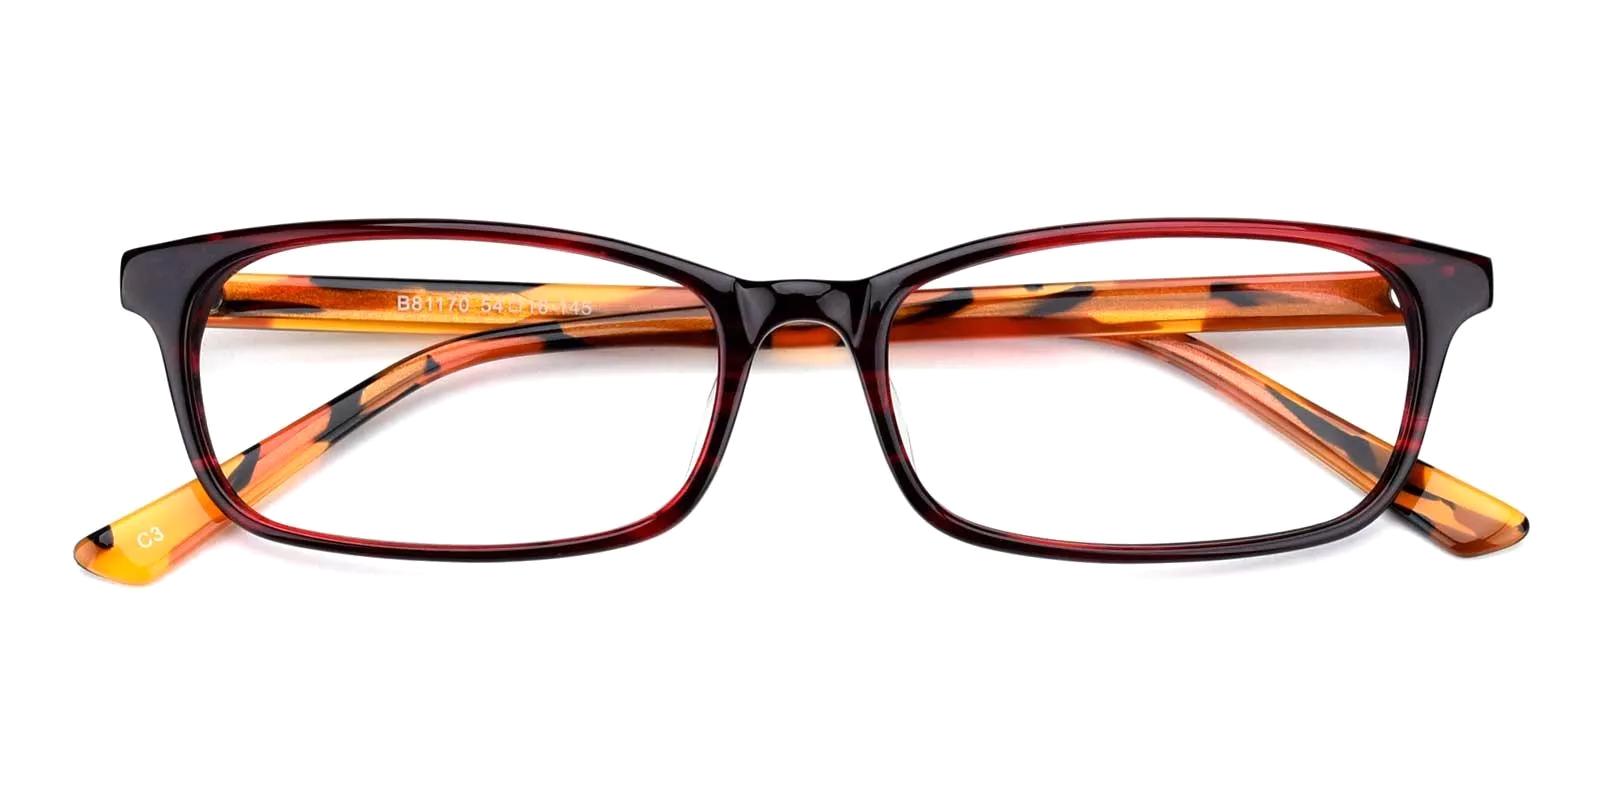 Guyment Red Acetate Eyeglasses , UniversalBridgeFit Frames from ABBE Glasses